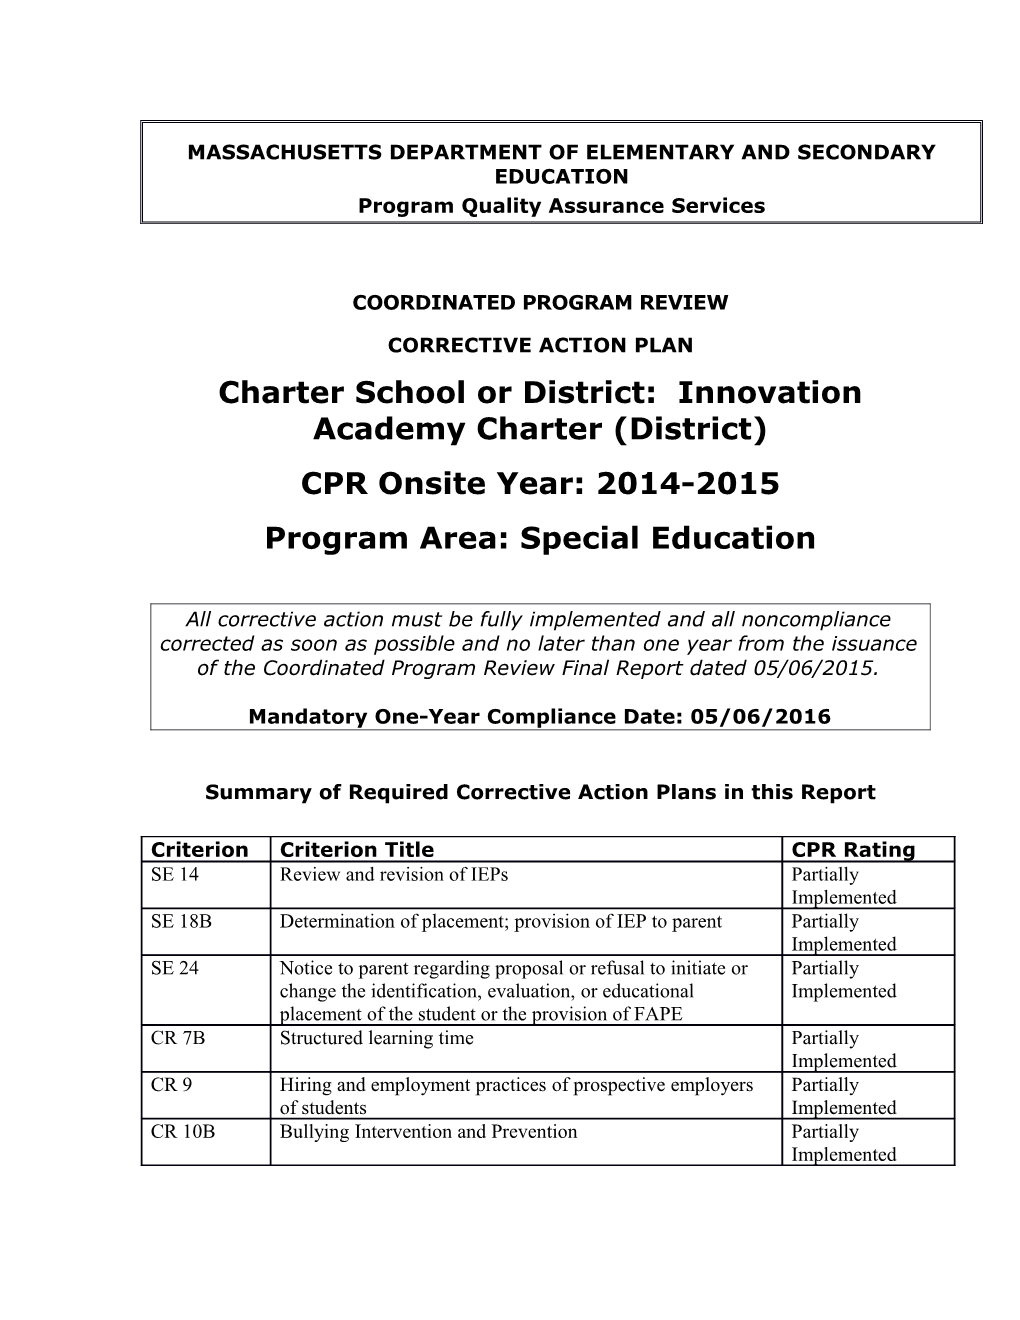 Innovation Academy Charter School CAP 2015